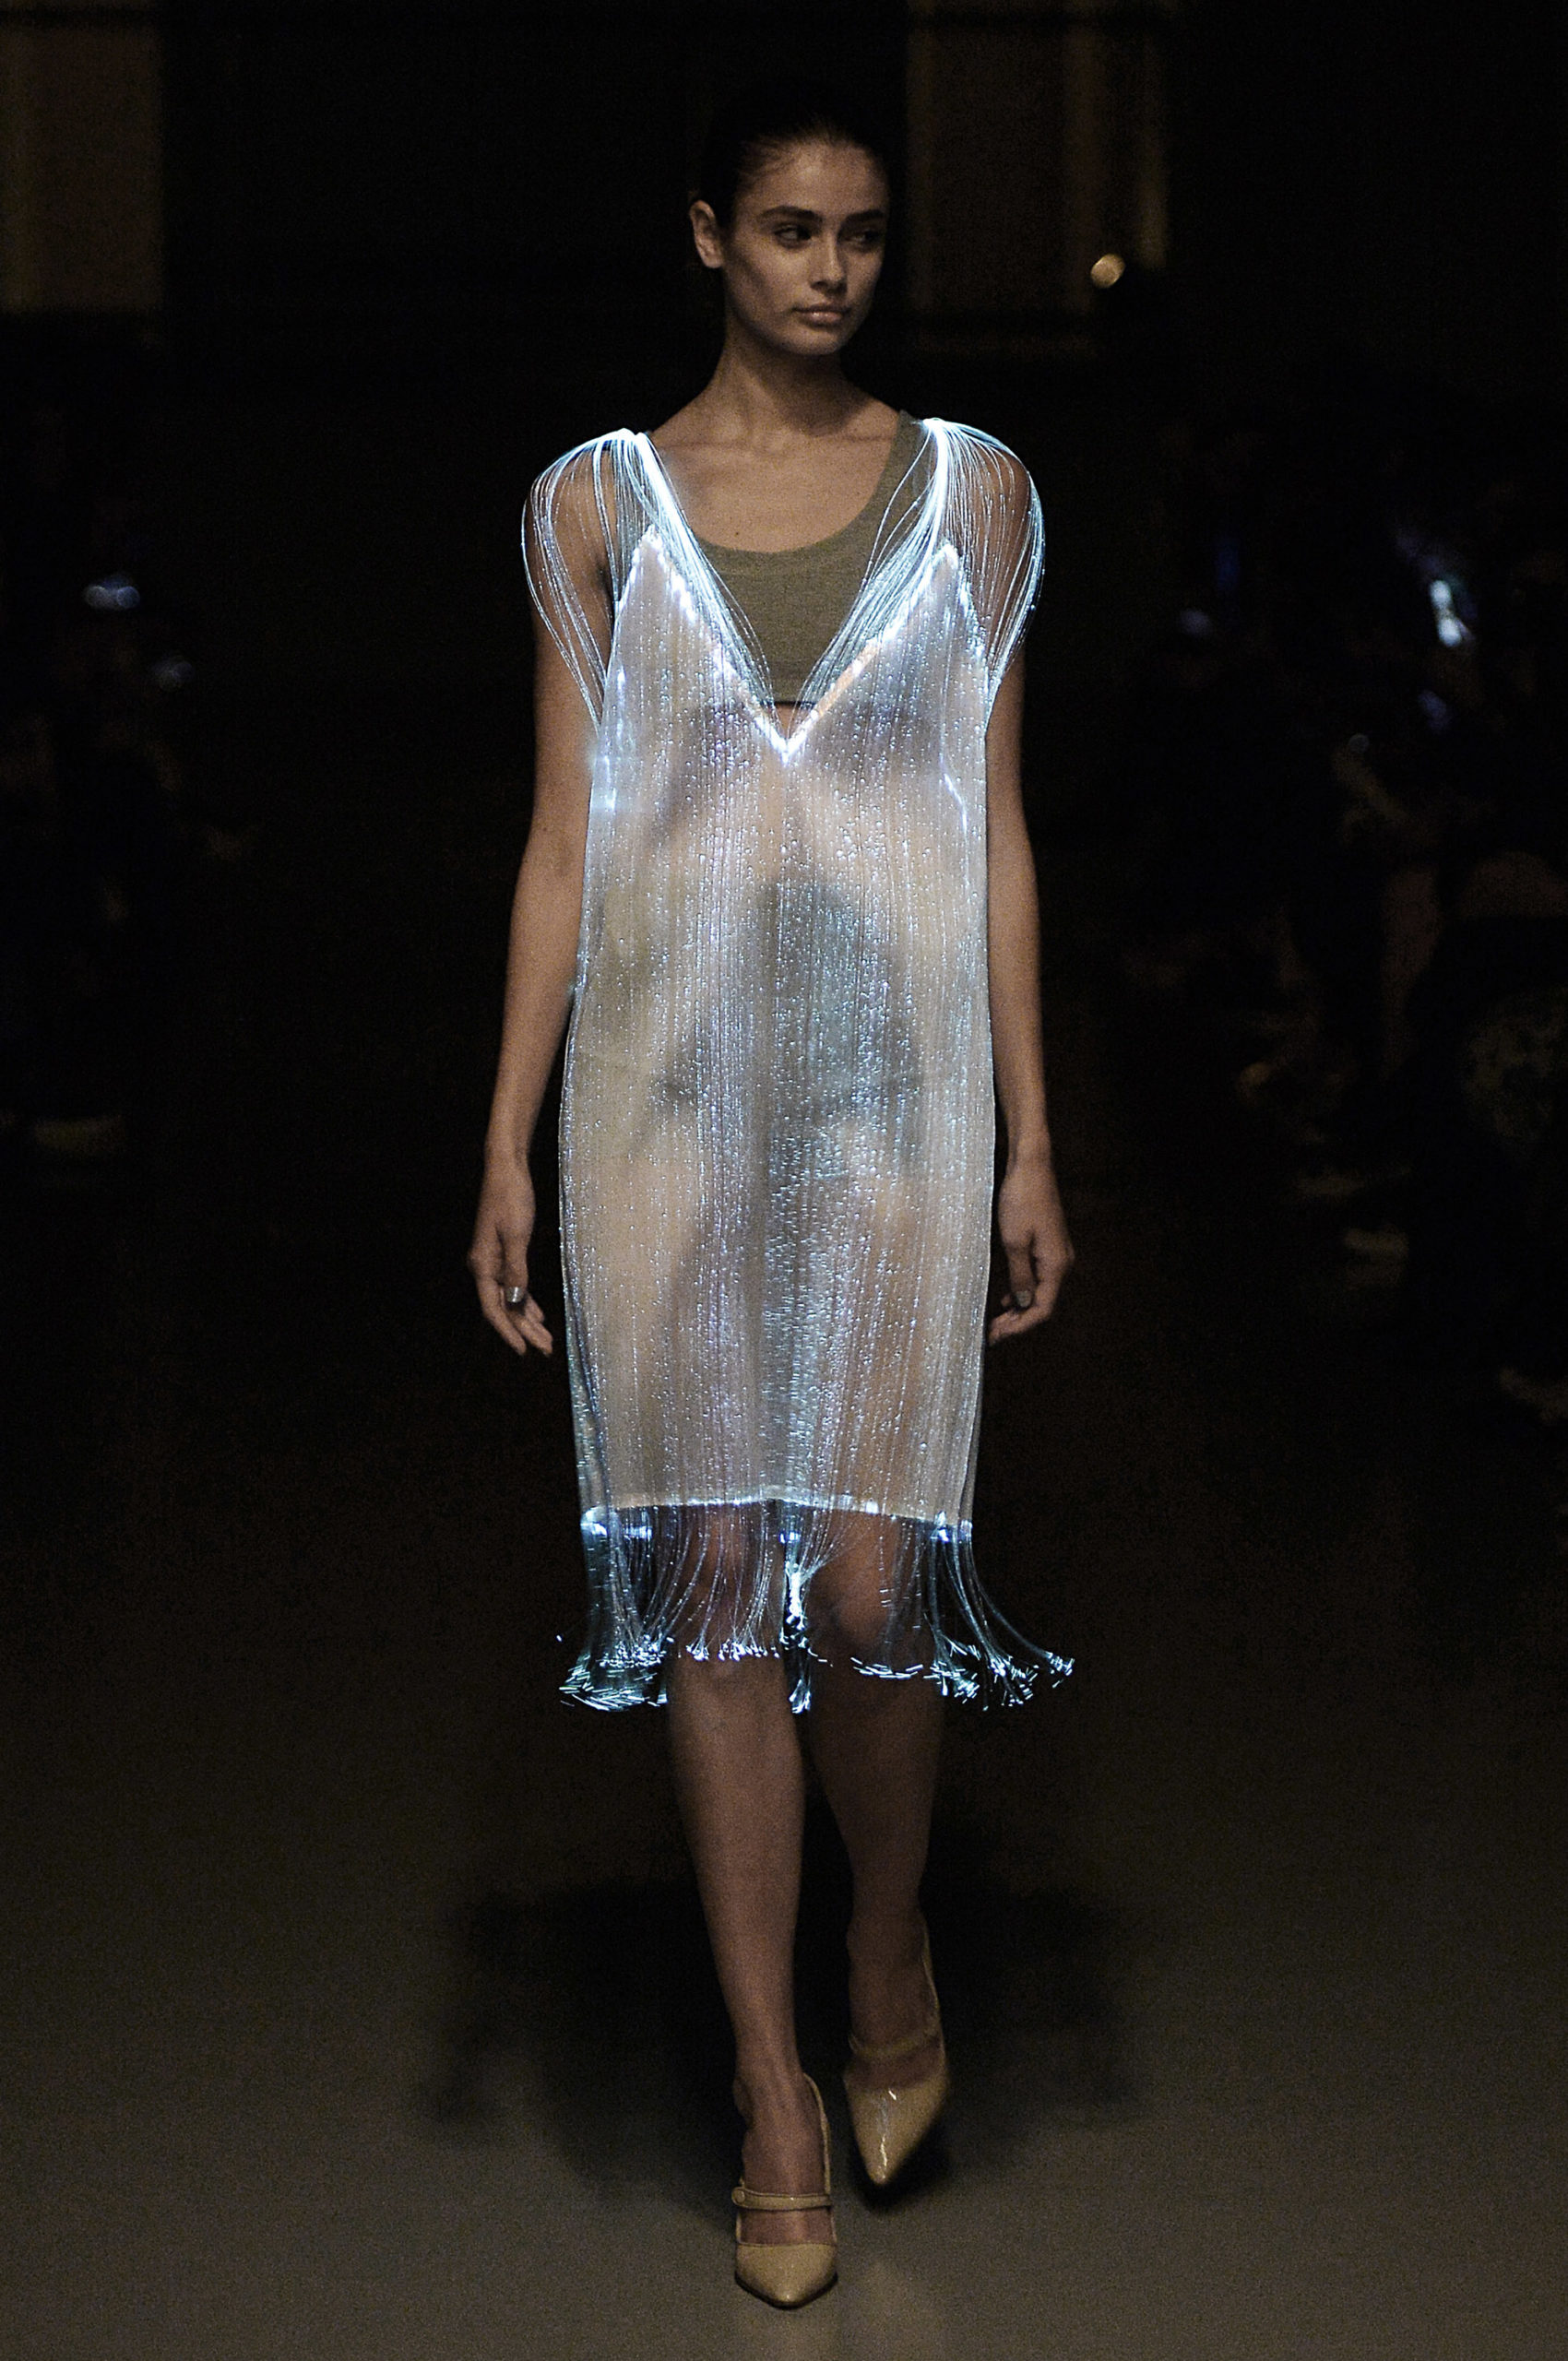 Model wearing fibre optic dress, Fashion Innovation Agency